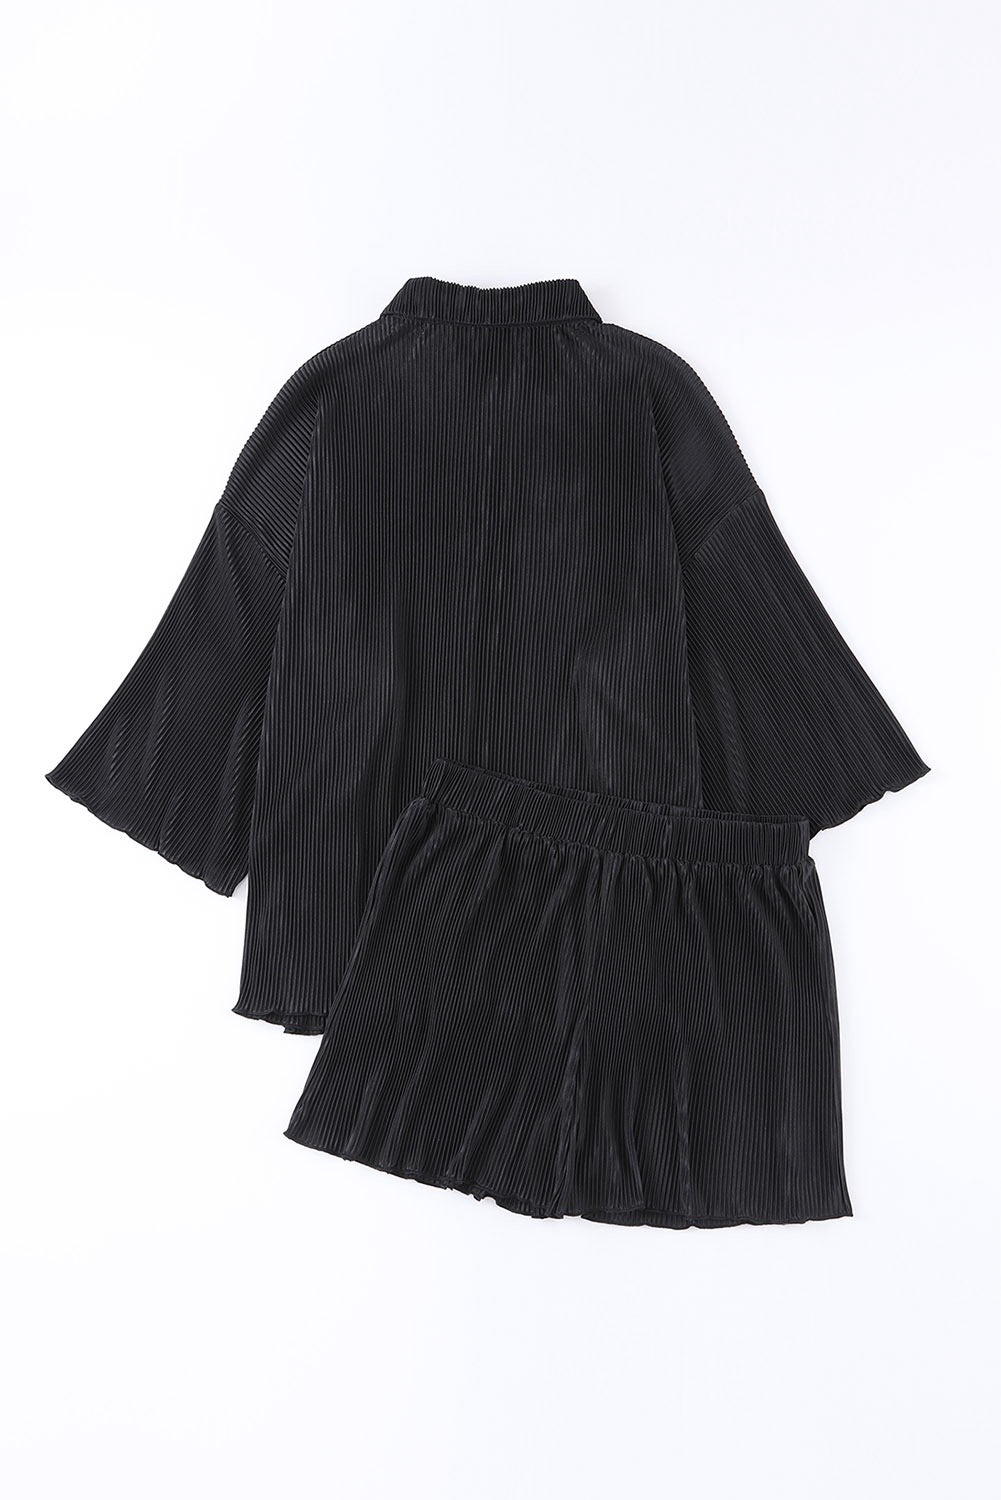 Black 3/4 Sleeves Pleated Shirt and High Waist Shorts Lounge Set